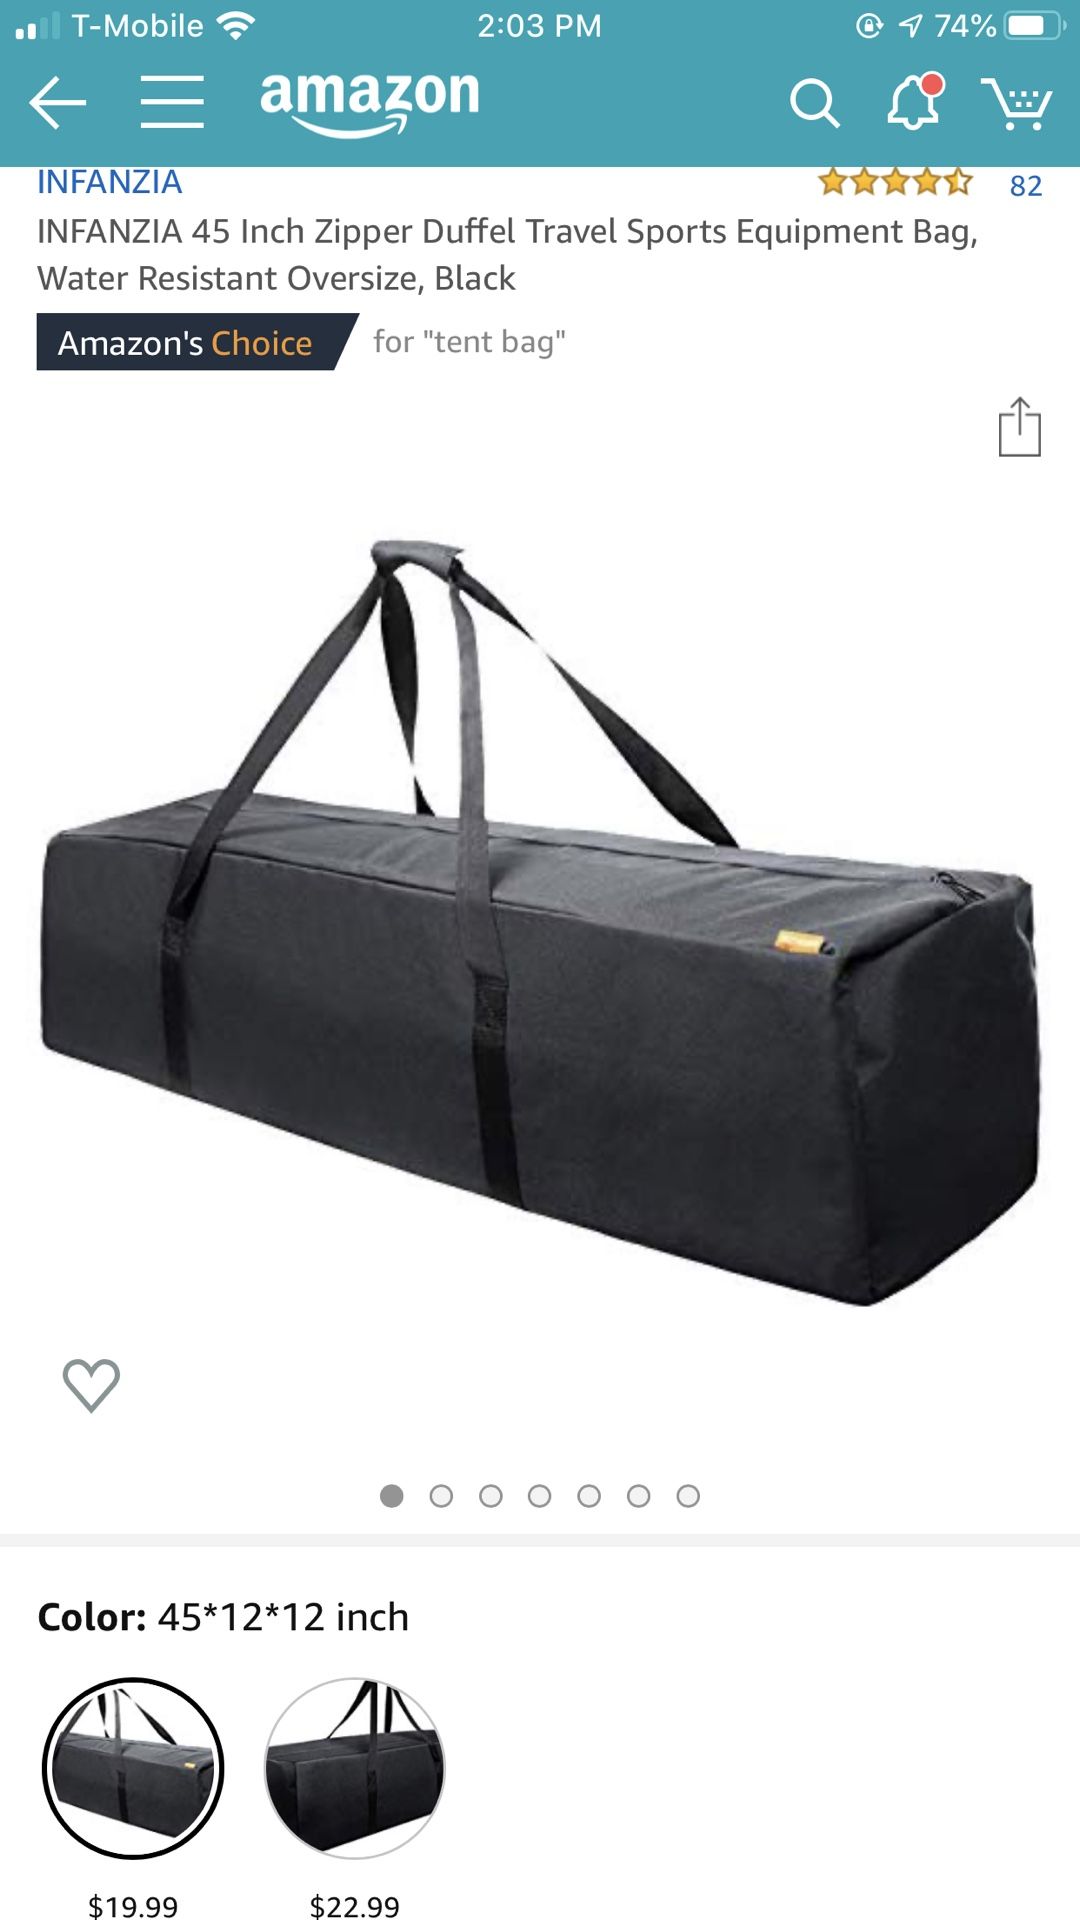 Brand new 45 inch zipper duffle travel sports equipment bag